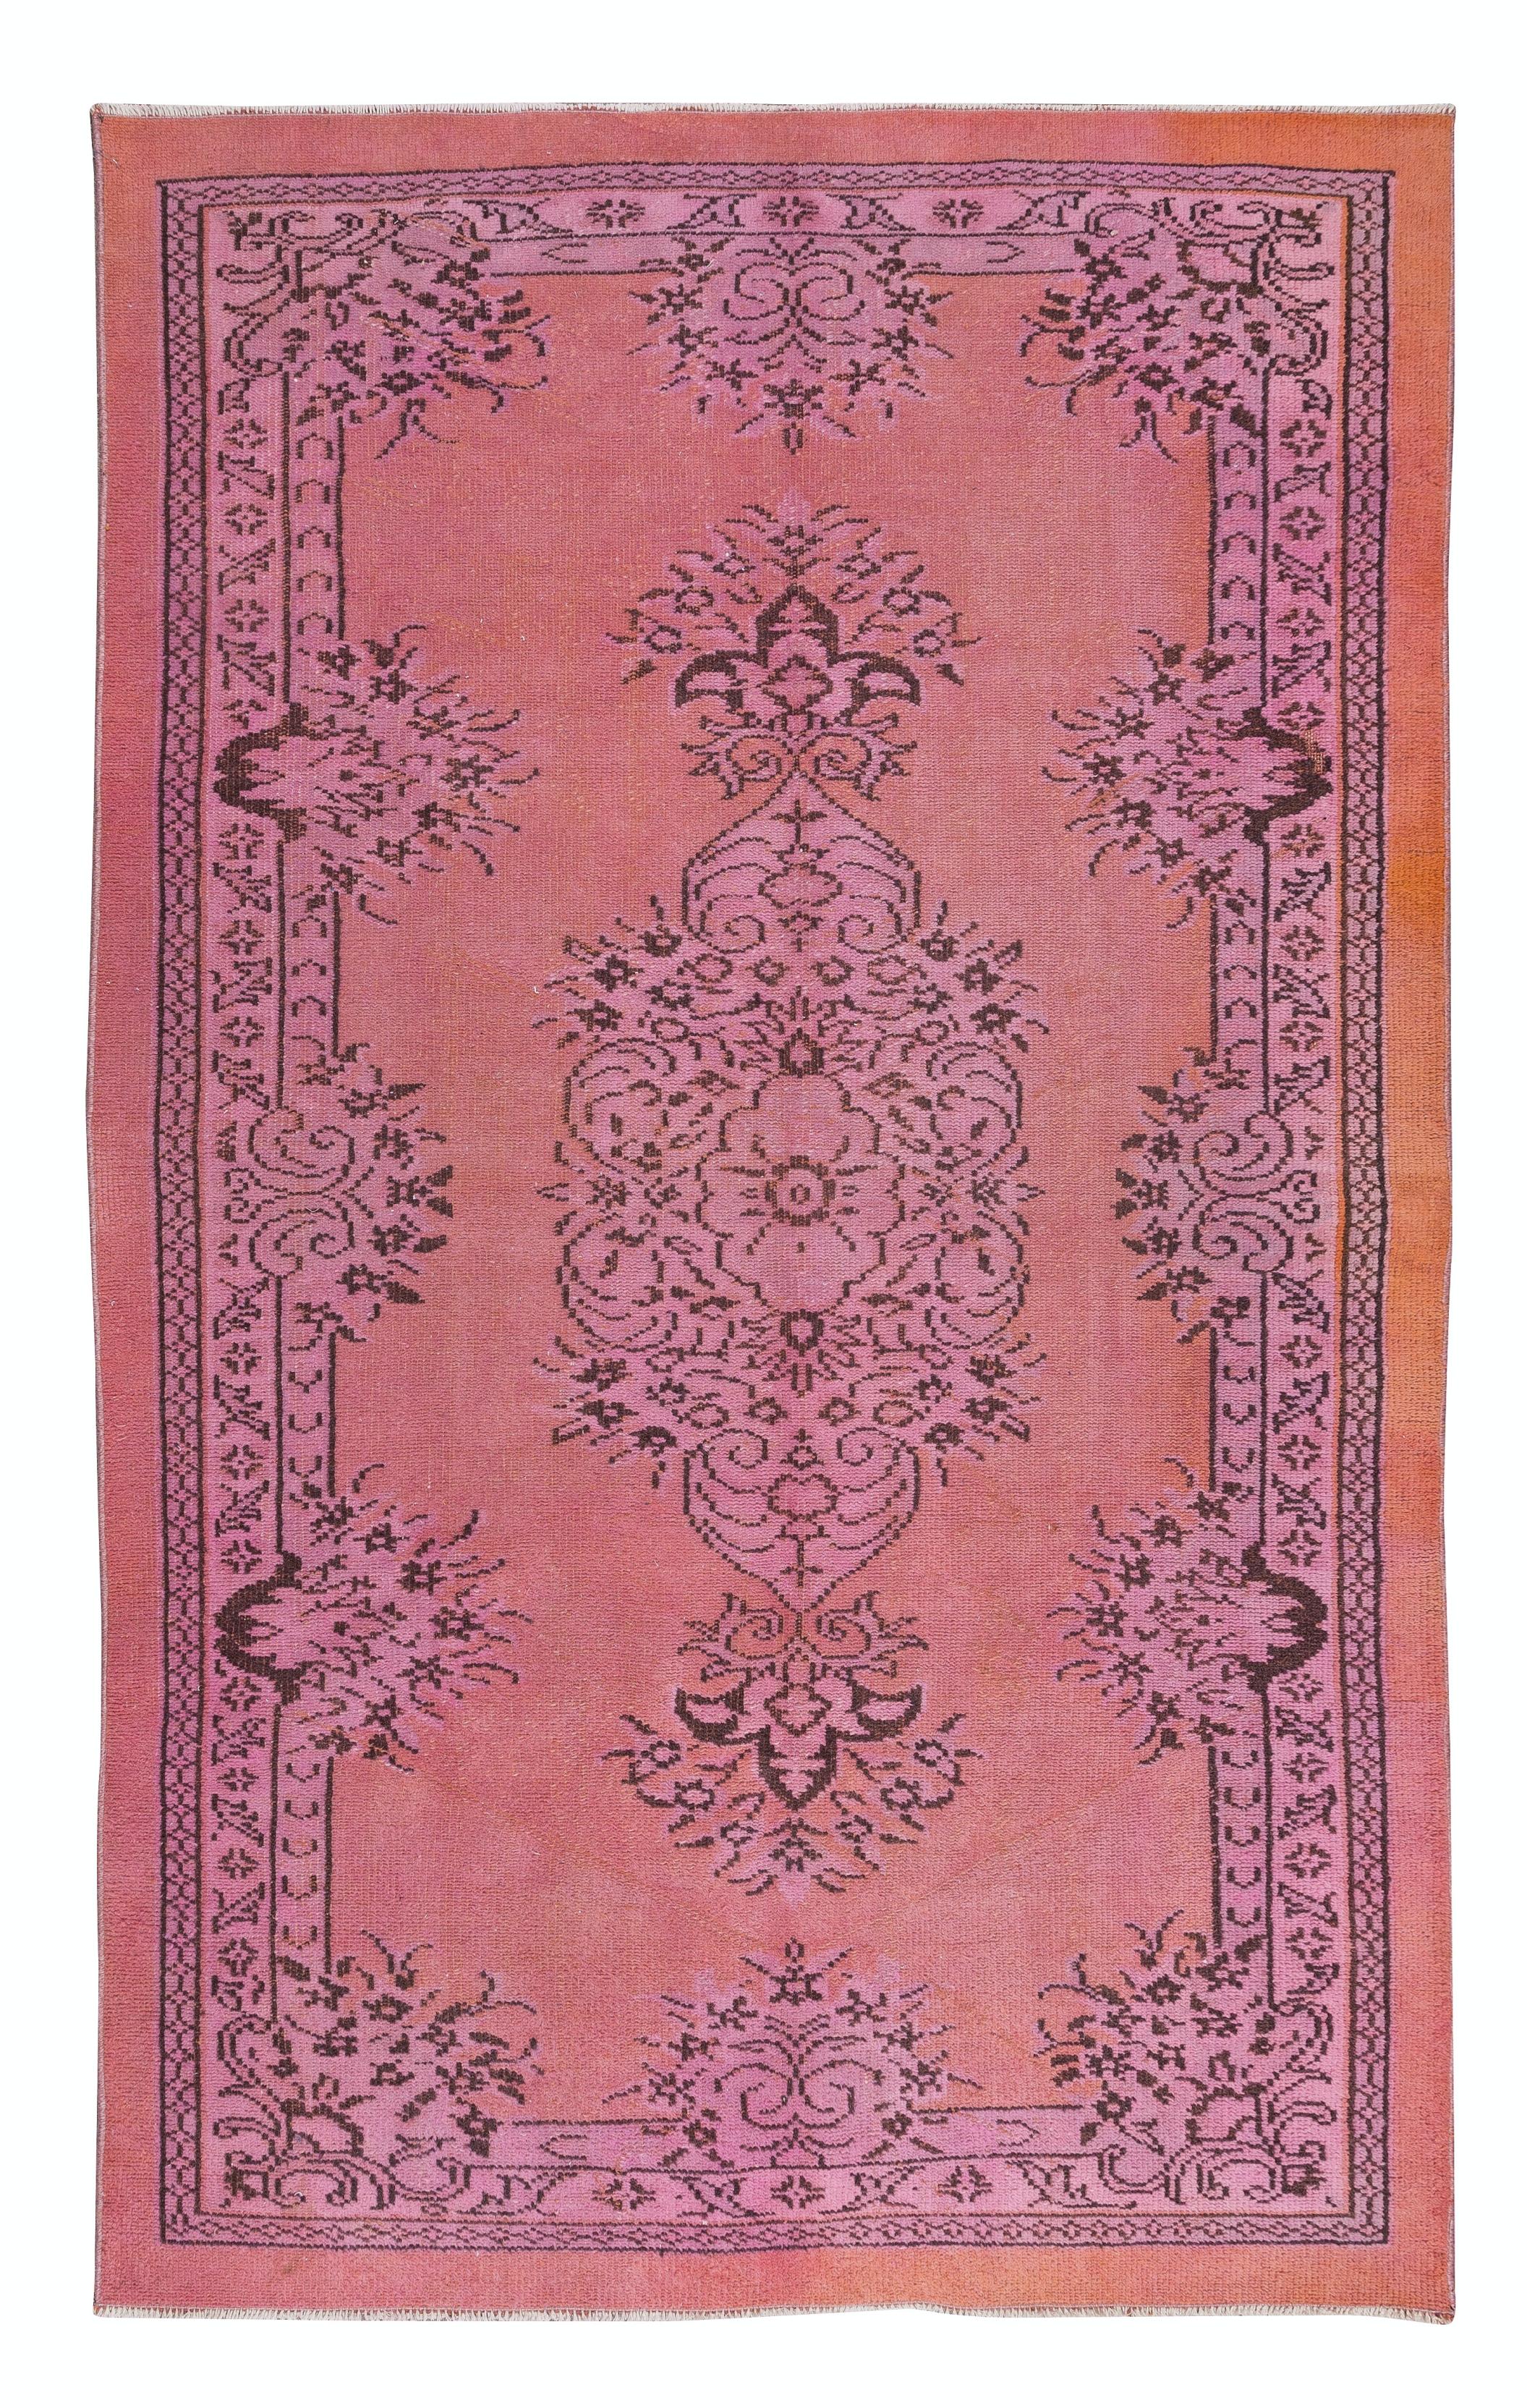 Modern 5.6x9 Ft Pink Living Room Decor Rug. Contemporary Handmade Turkish Wool Carpet For Sale